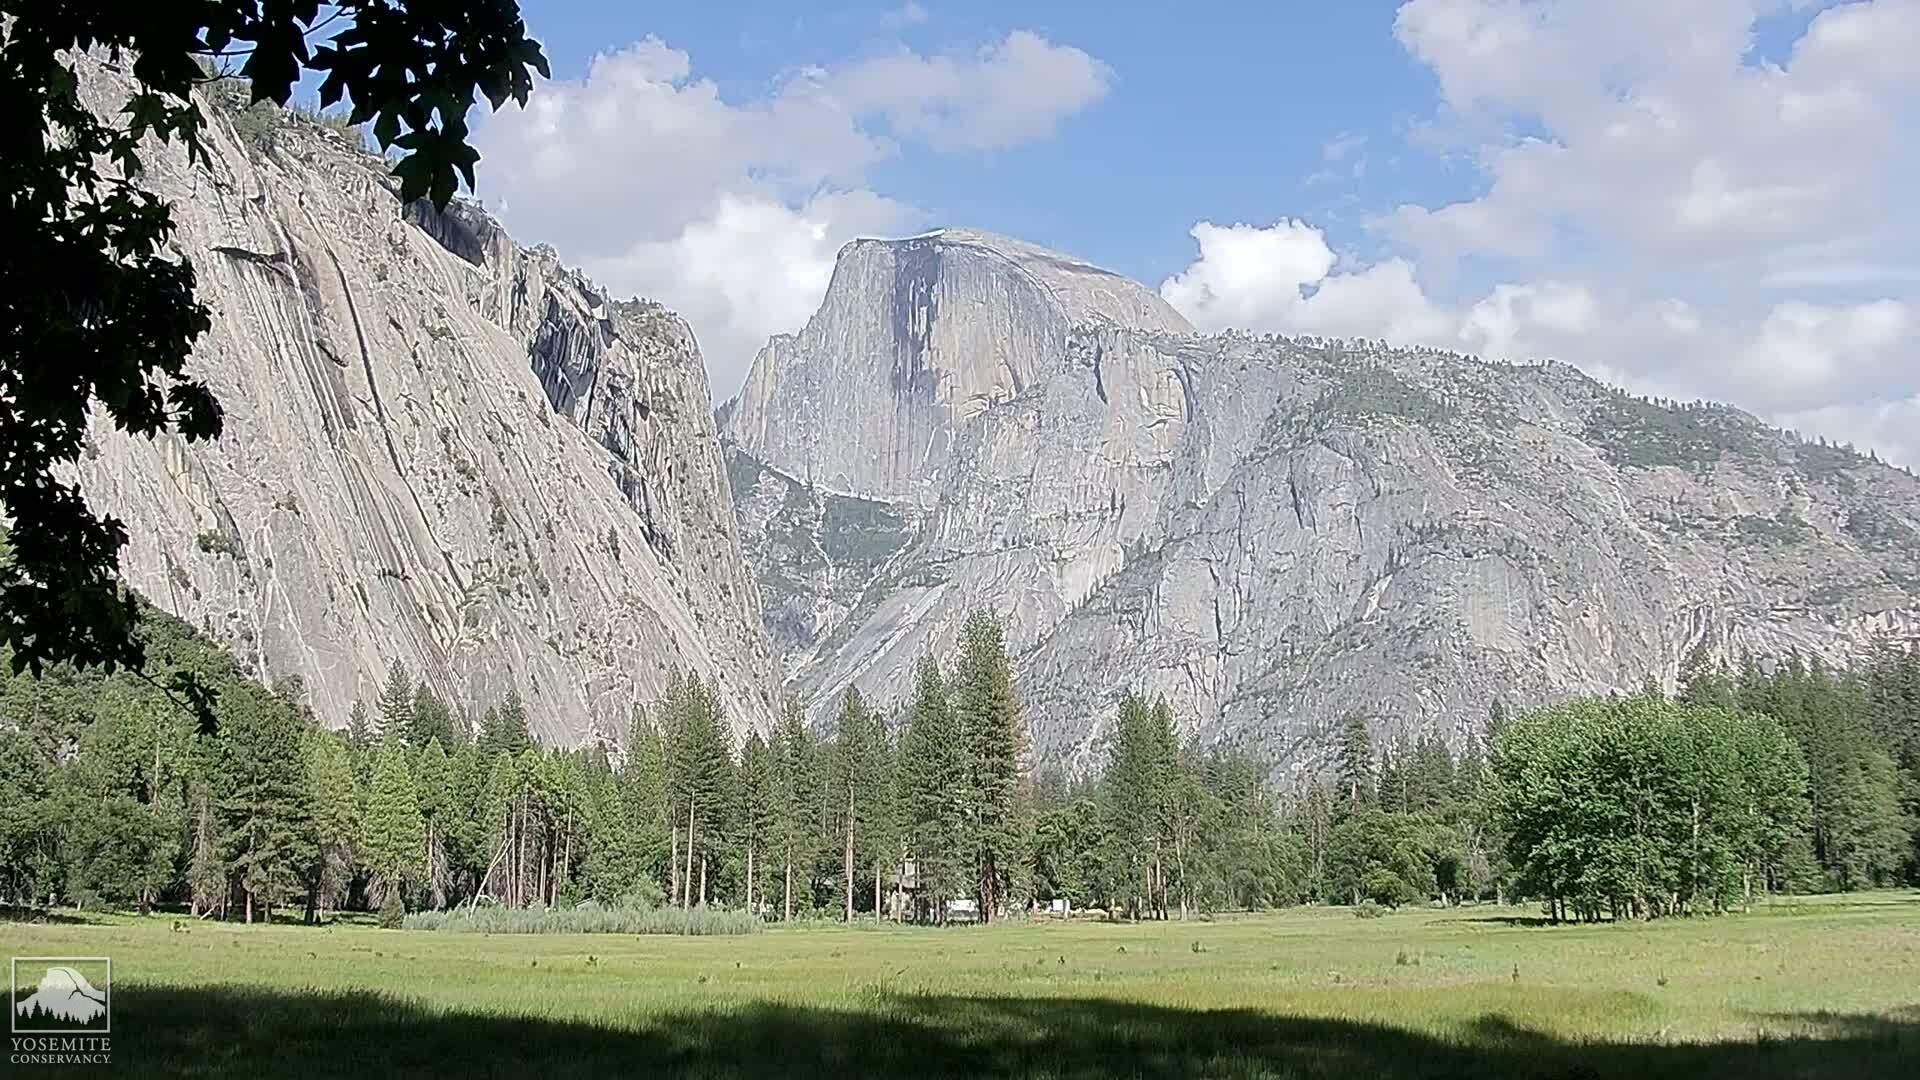 Yosemite National Park, Californie Me. 16:45